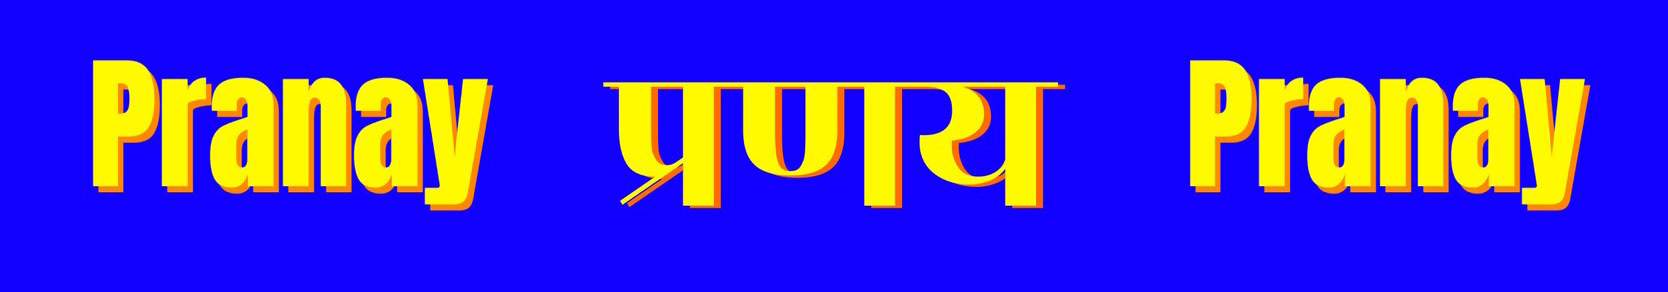 Pranay Kumar's profile banner